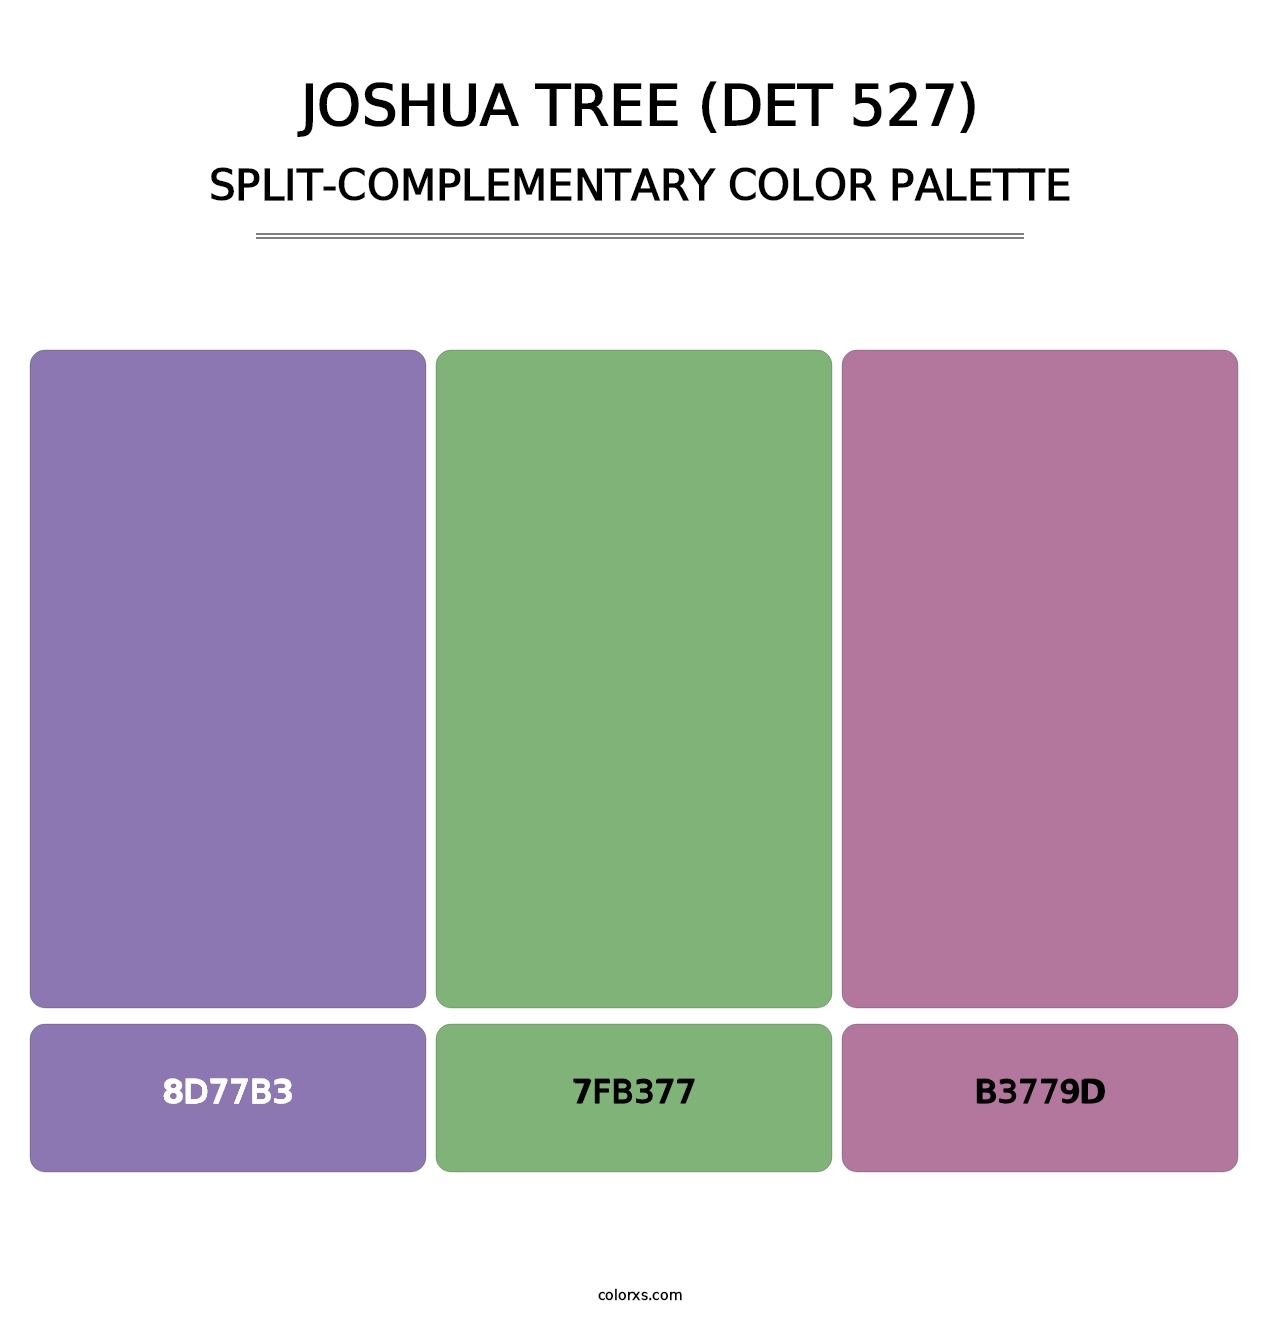 Joshua Tree (DET 527) - Split-Complementary Color Palette